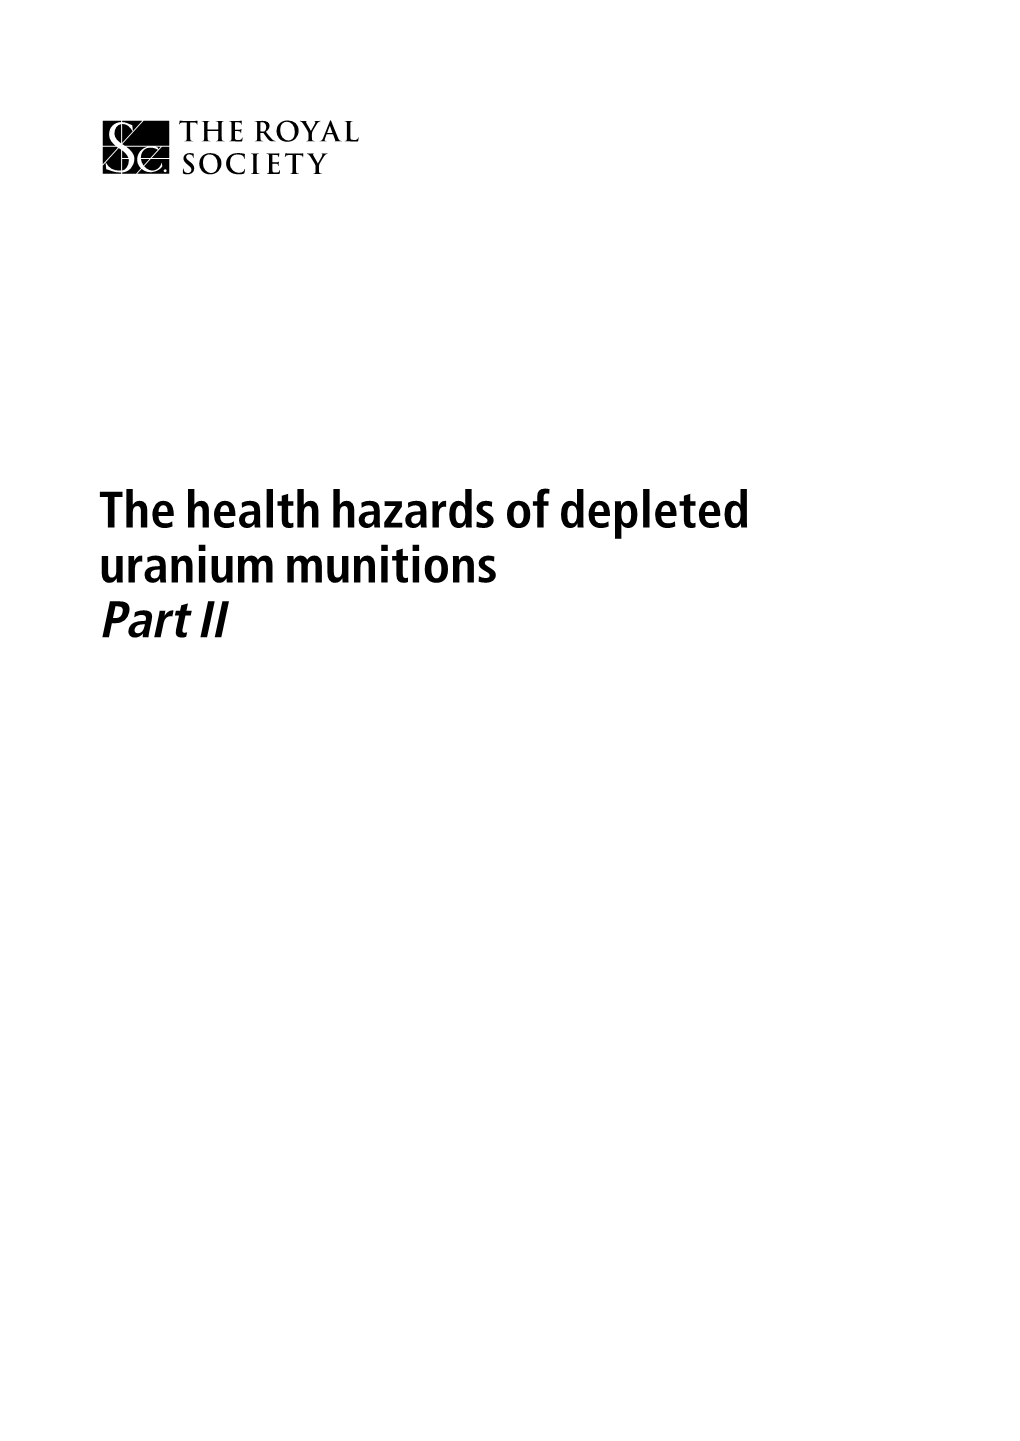 The Health Hazards of Depleted Uranium Munitions: Part II